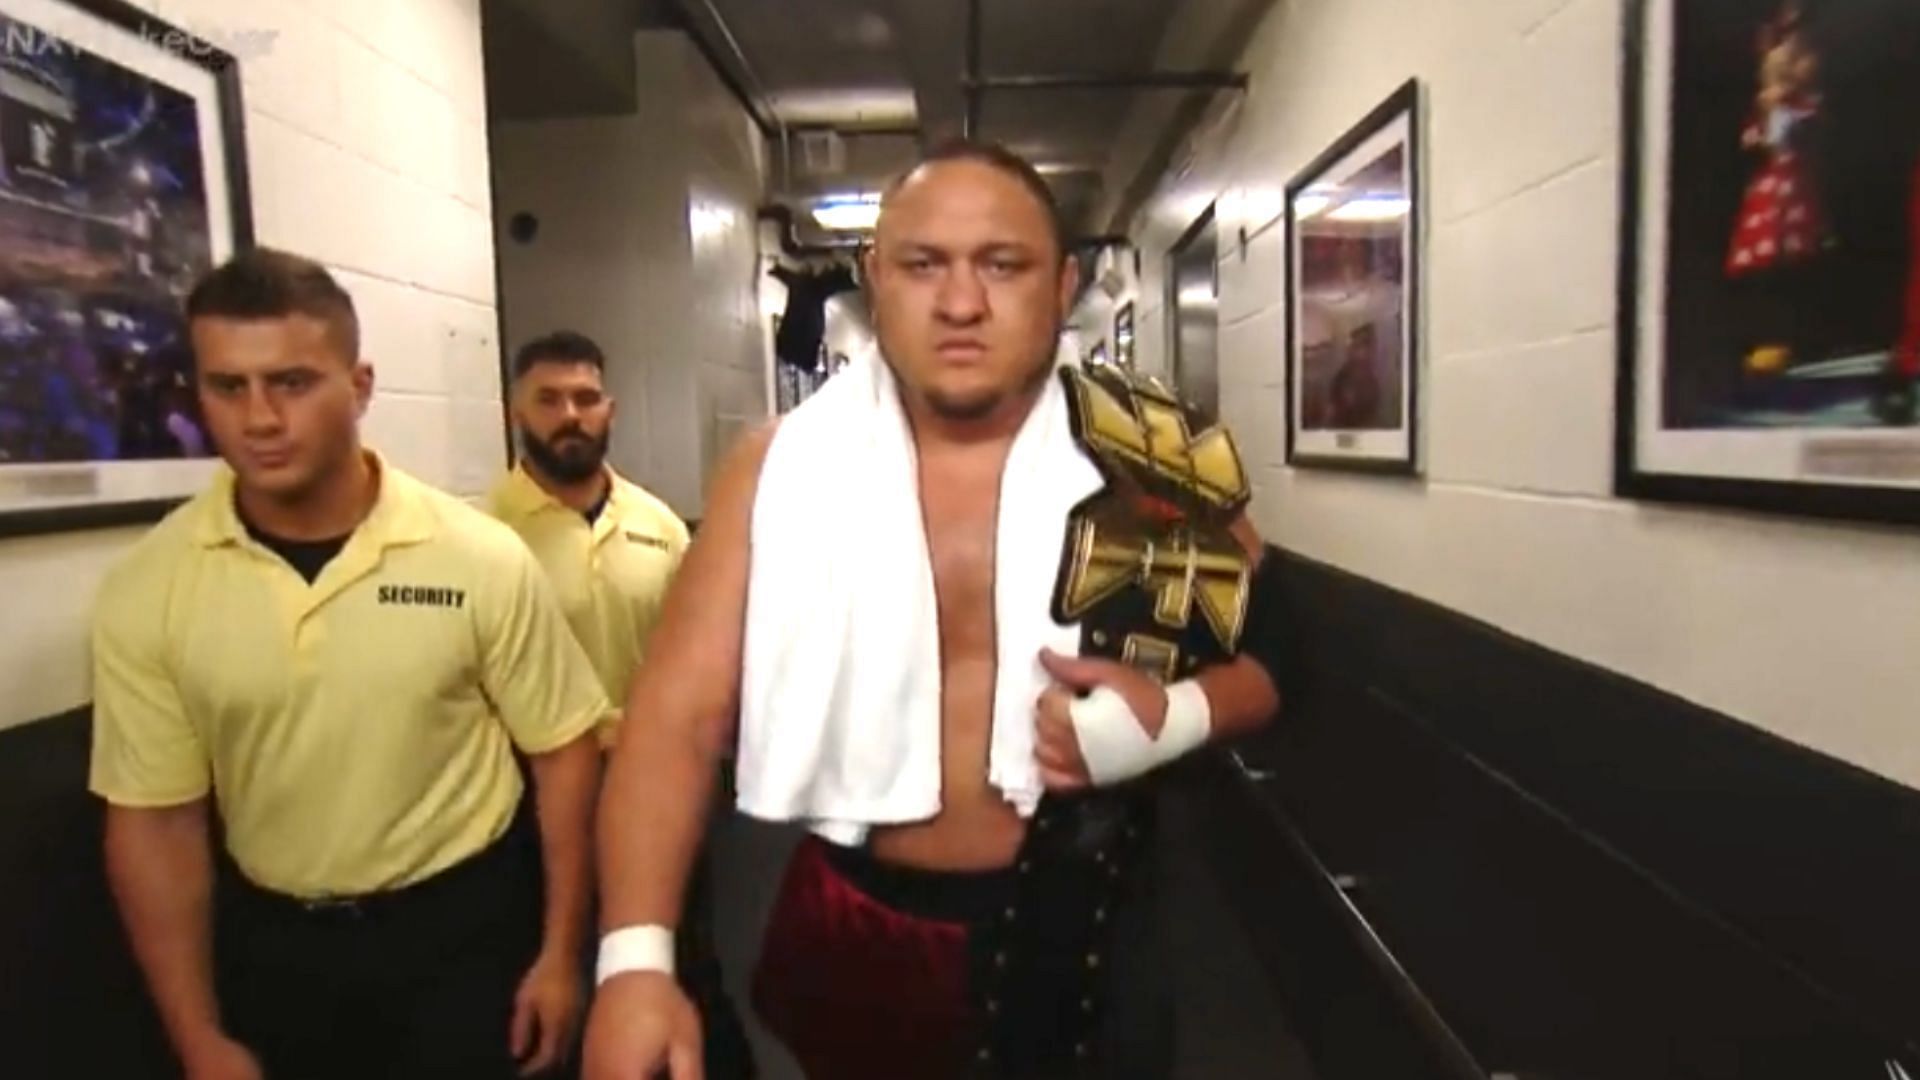 Samoa Joe is current ROH TV Champion